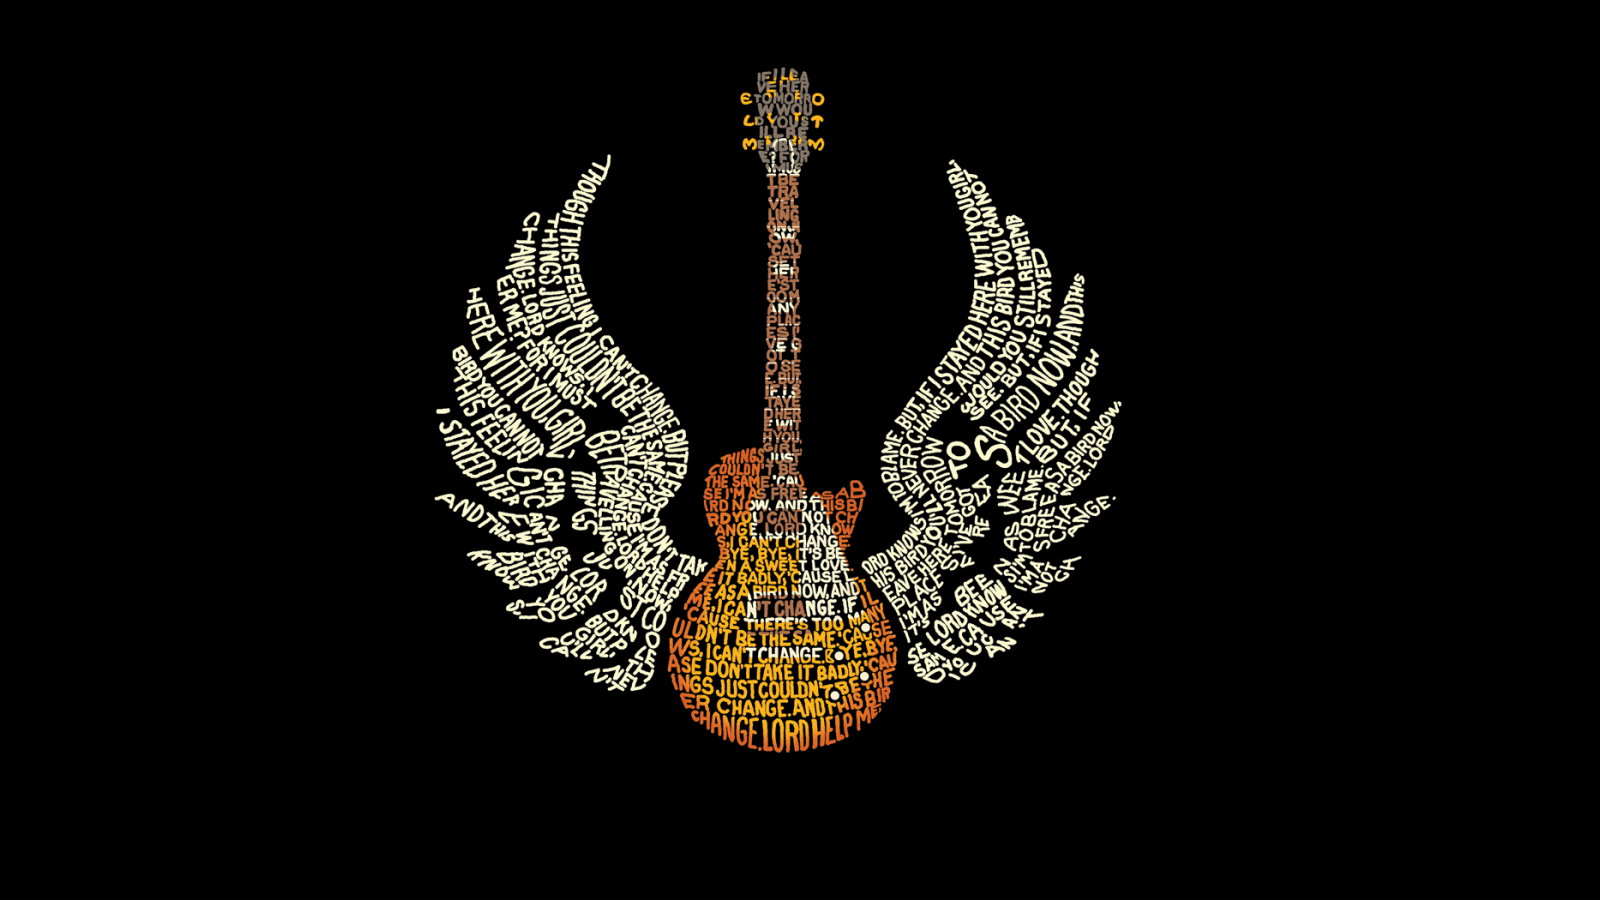 Guitar Gibson Les Paul Wallpapers